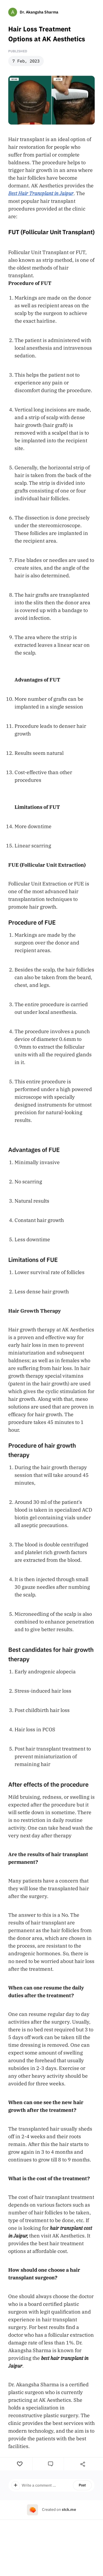 Hair Loss Treatment Options at AK Aesthetics